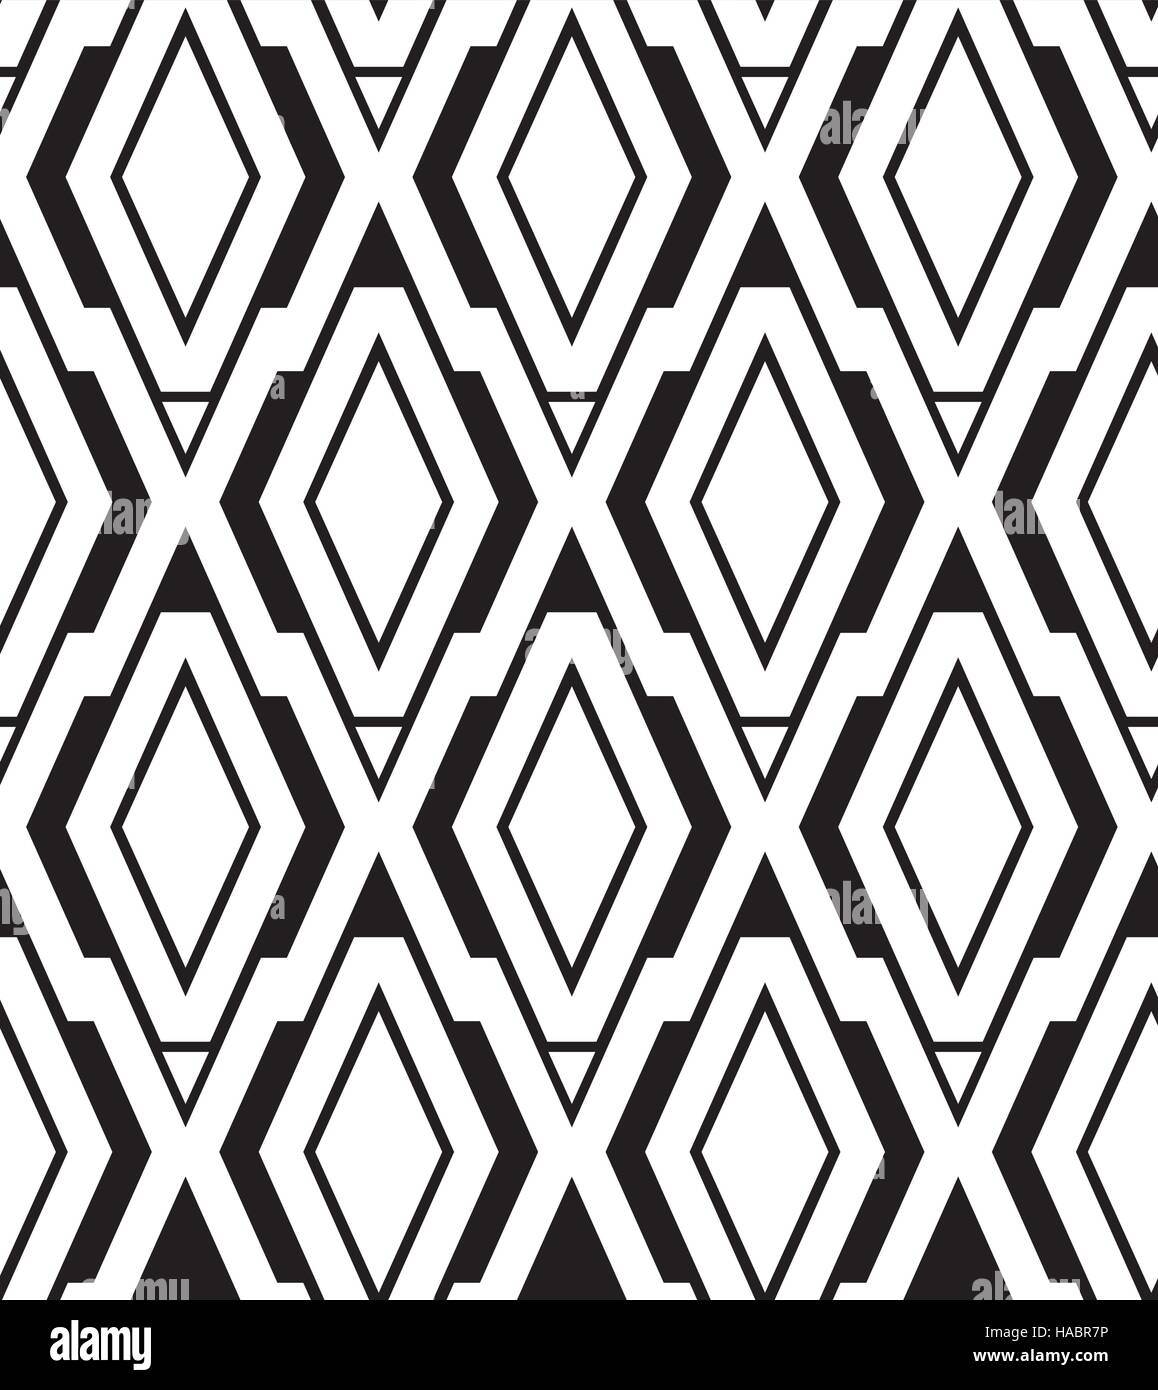 Diamond fabric pattern Stock Vector Images - Alamy